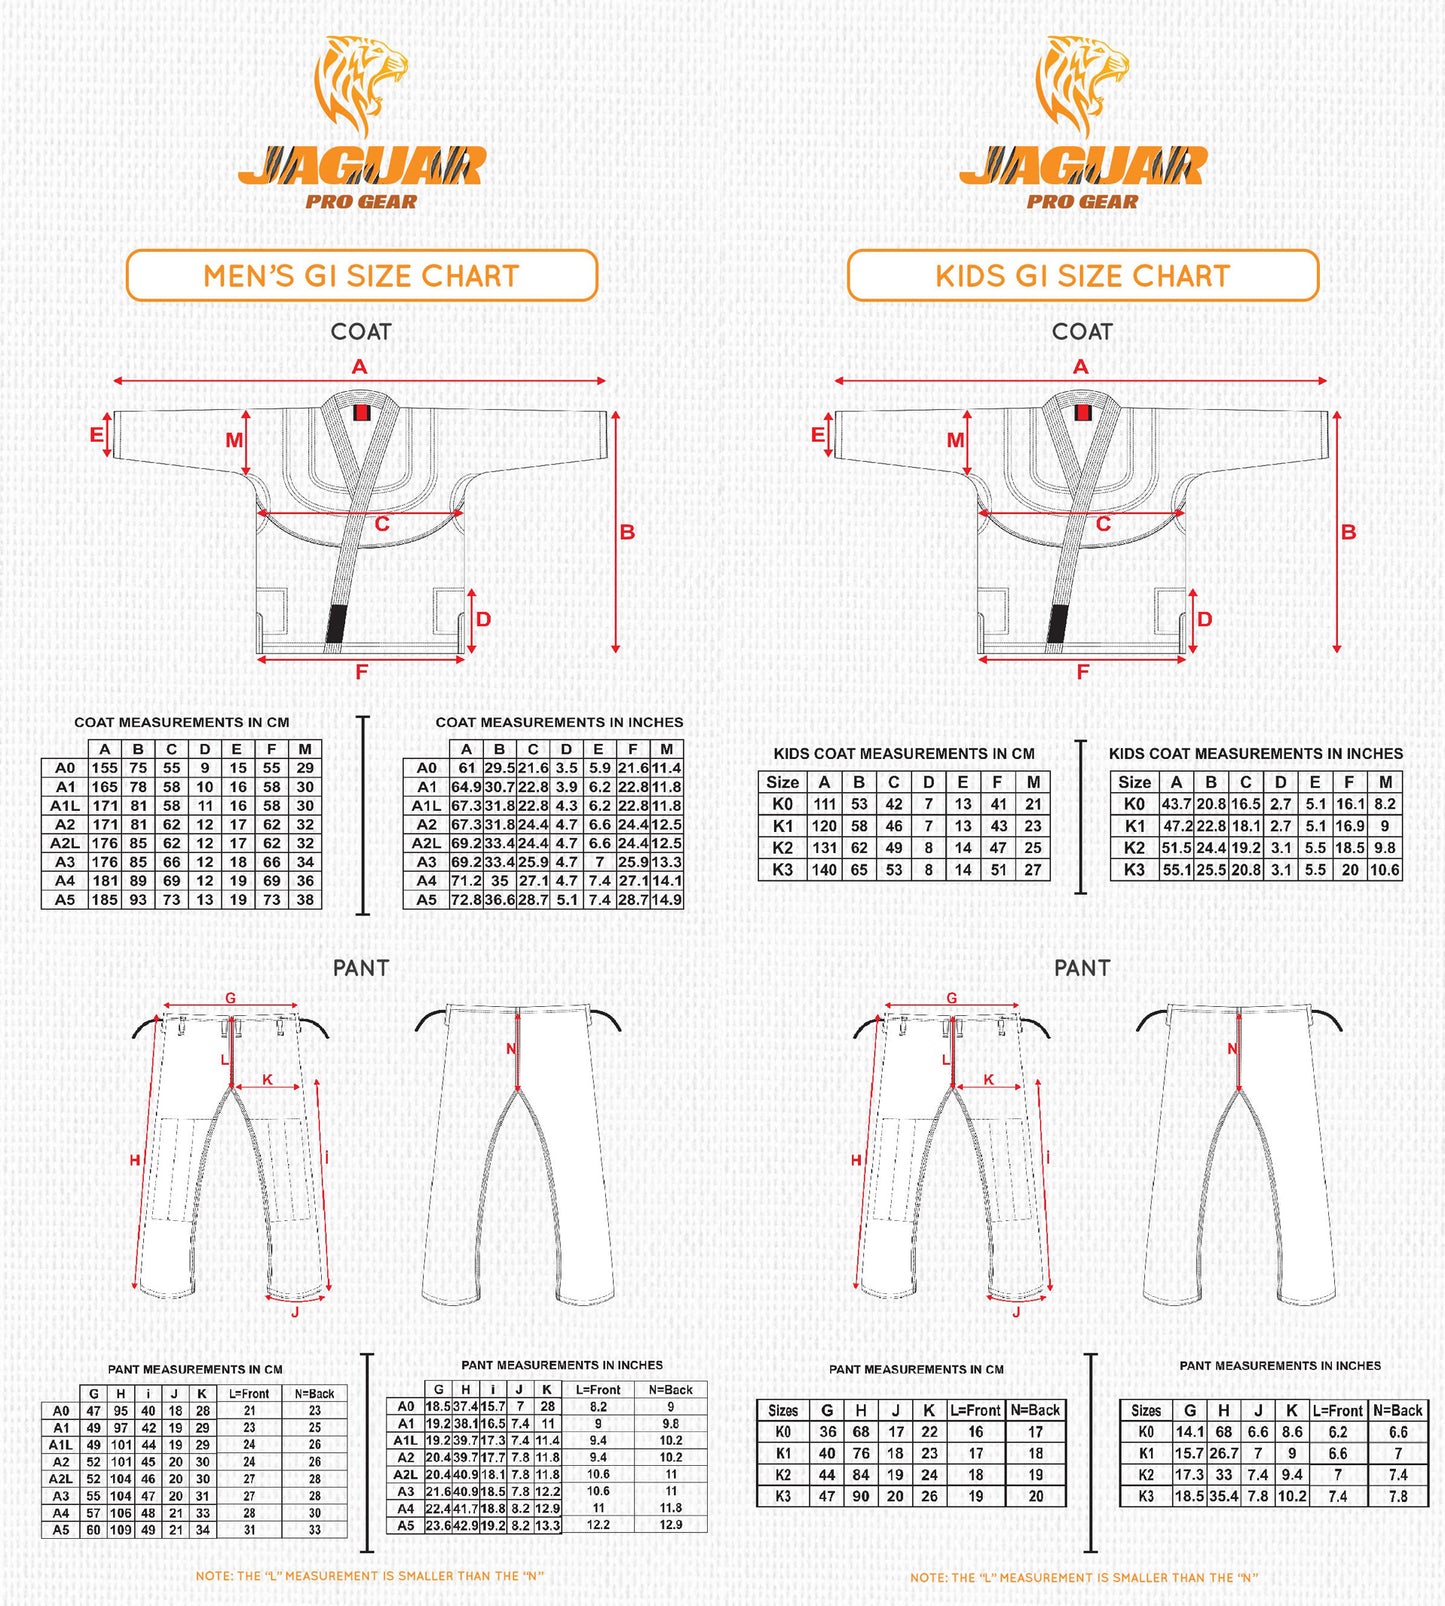 Jaguar Pro Gear - The Skull Inner Sublimated - Pro Brazilian Jiu Jitsu Kimono Gi Uniform Unisex